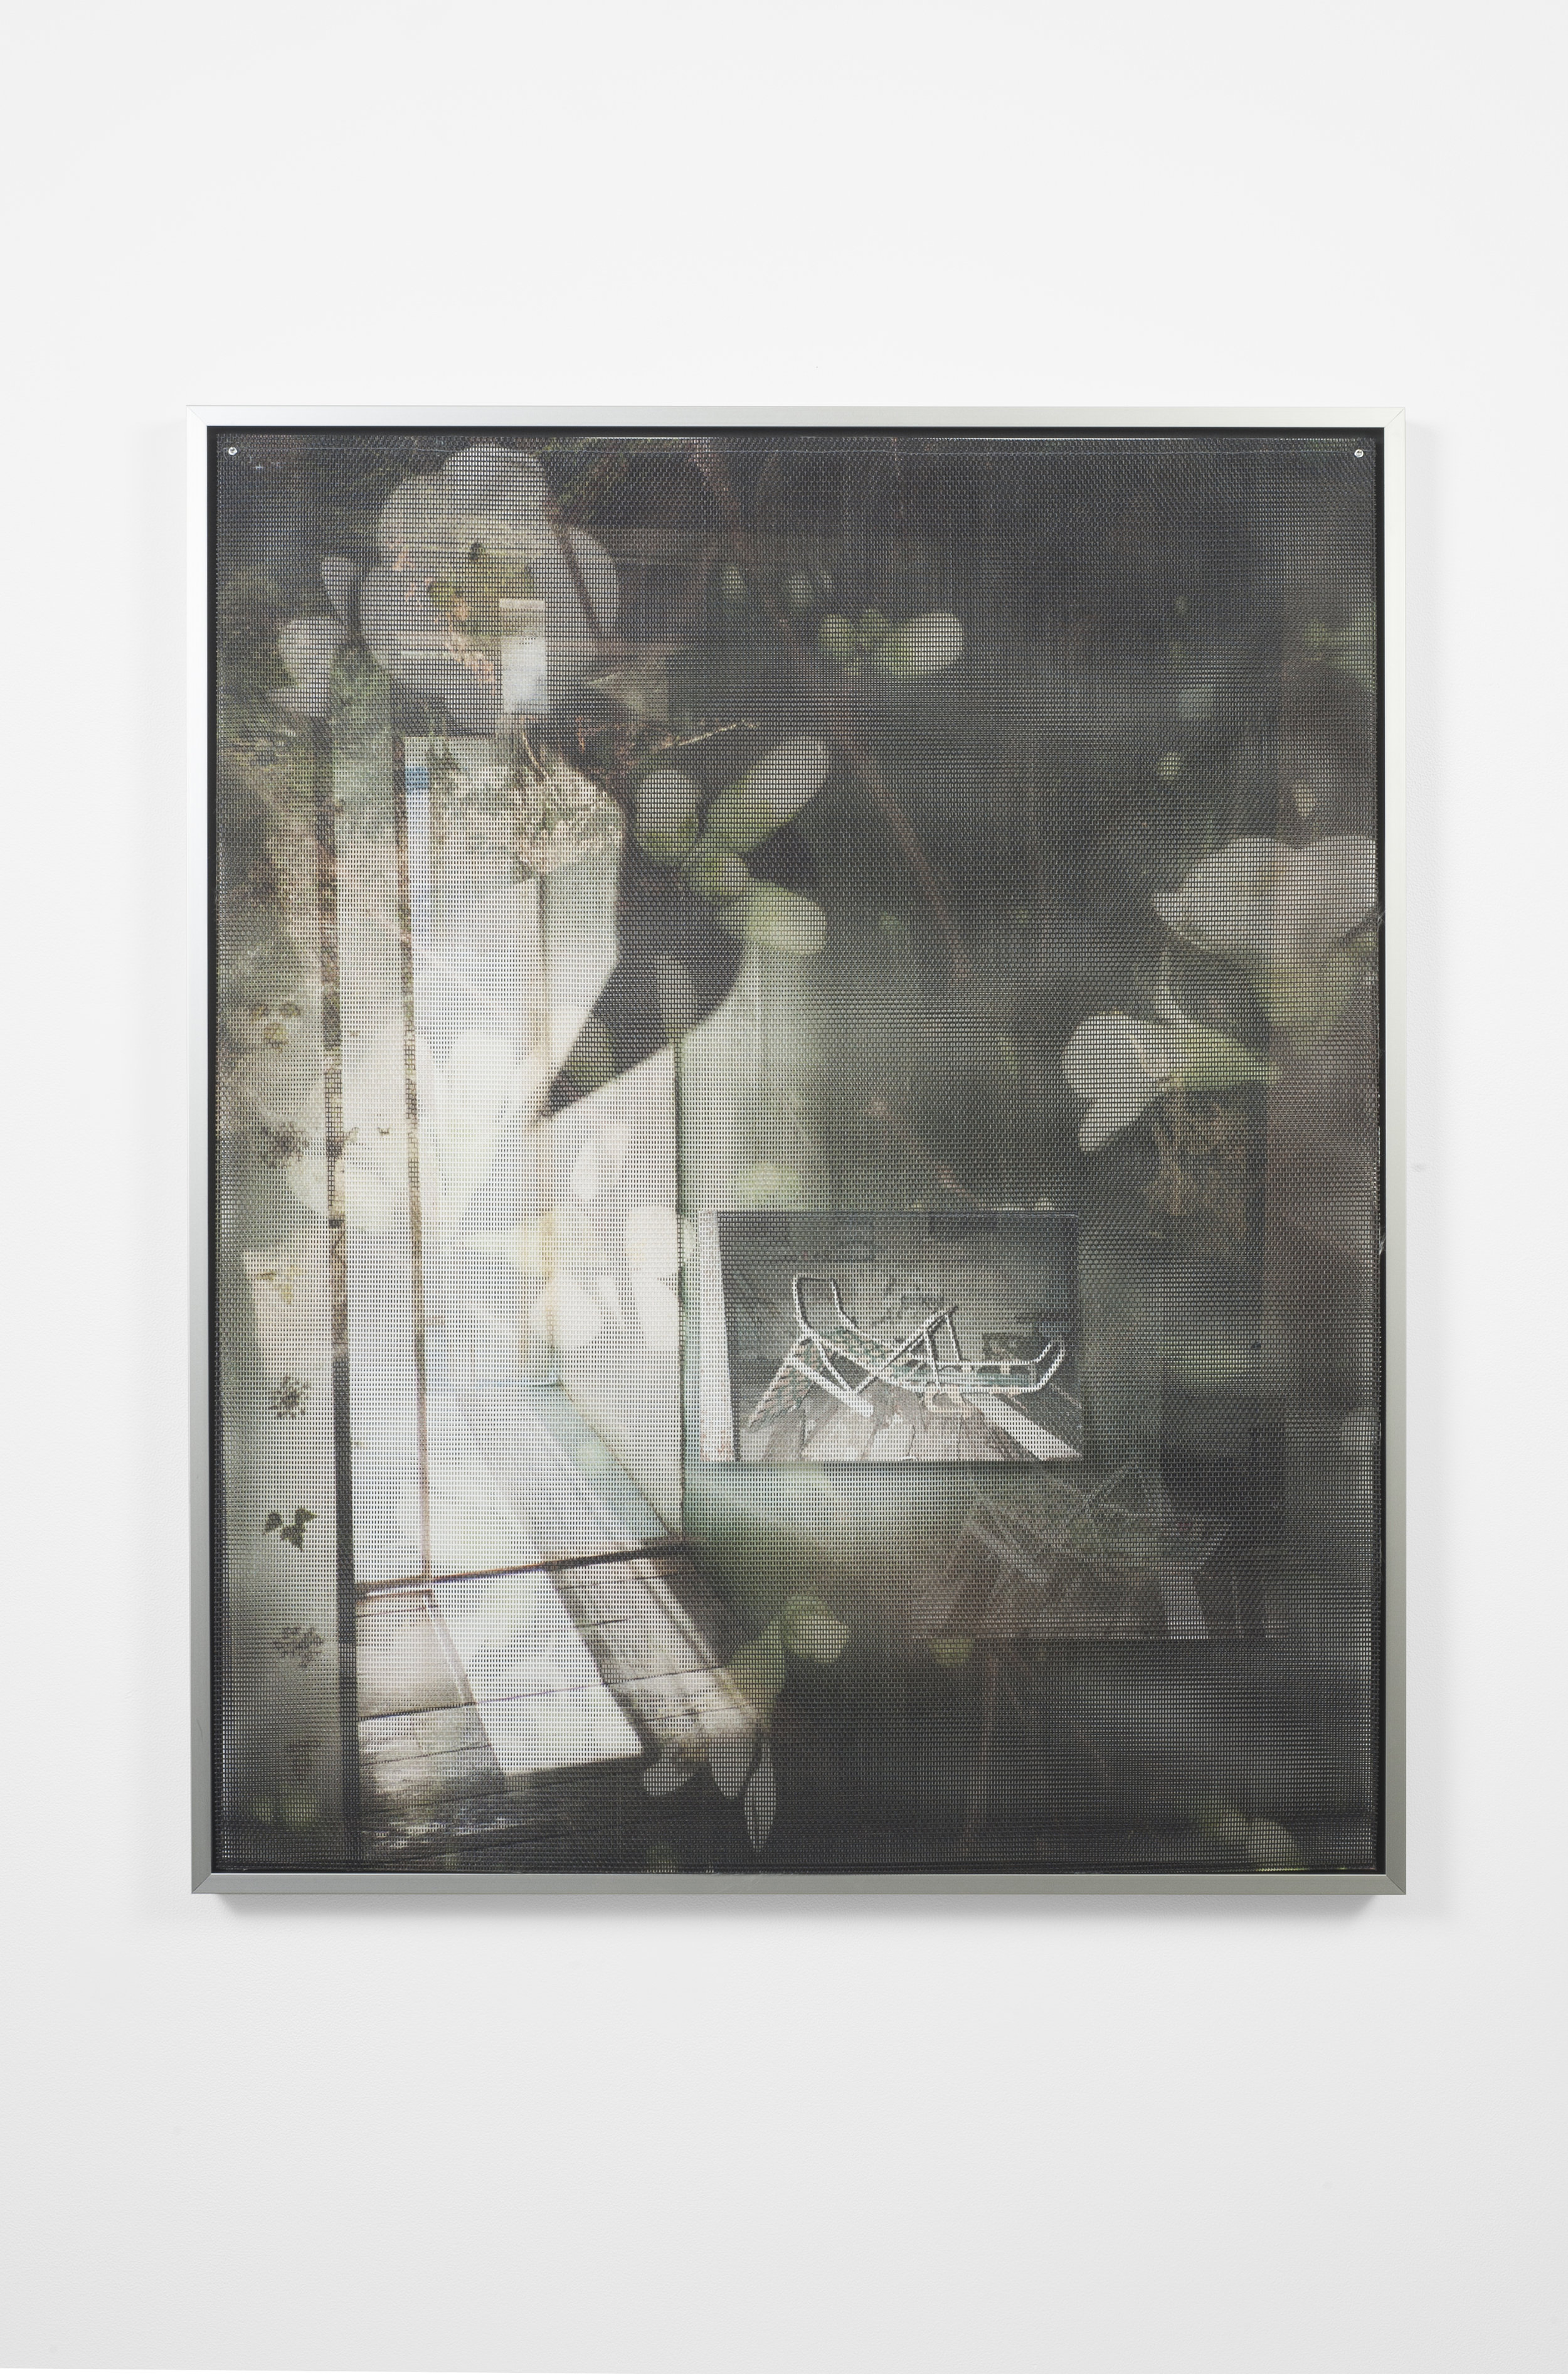  Ellie Hunter,  Untitled,  2019, UV inkjet print on vinyl mesh, 24.4 x 31.5 inches 